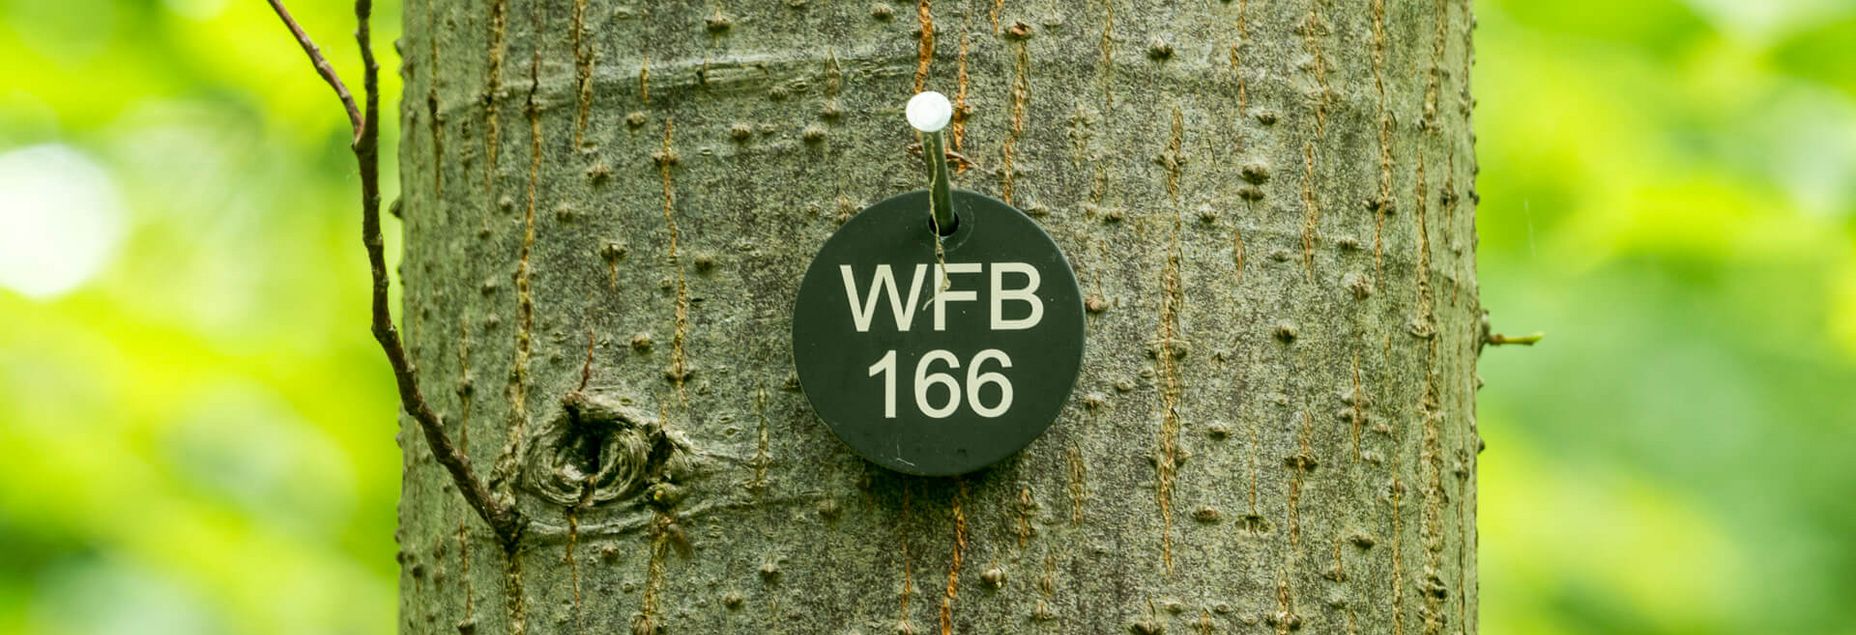 FriedWald-Onlineshop WFB 166